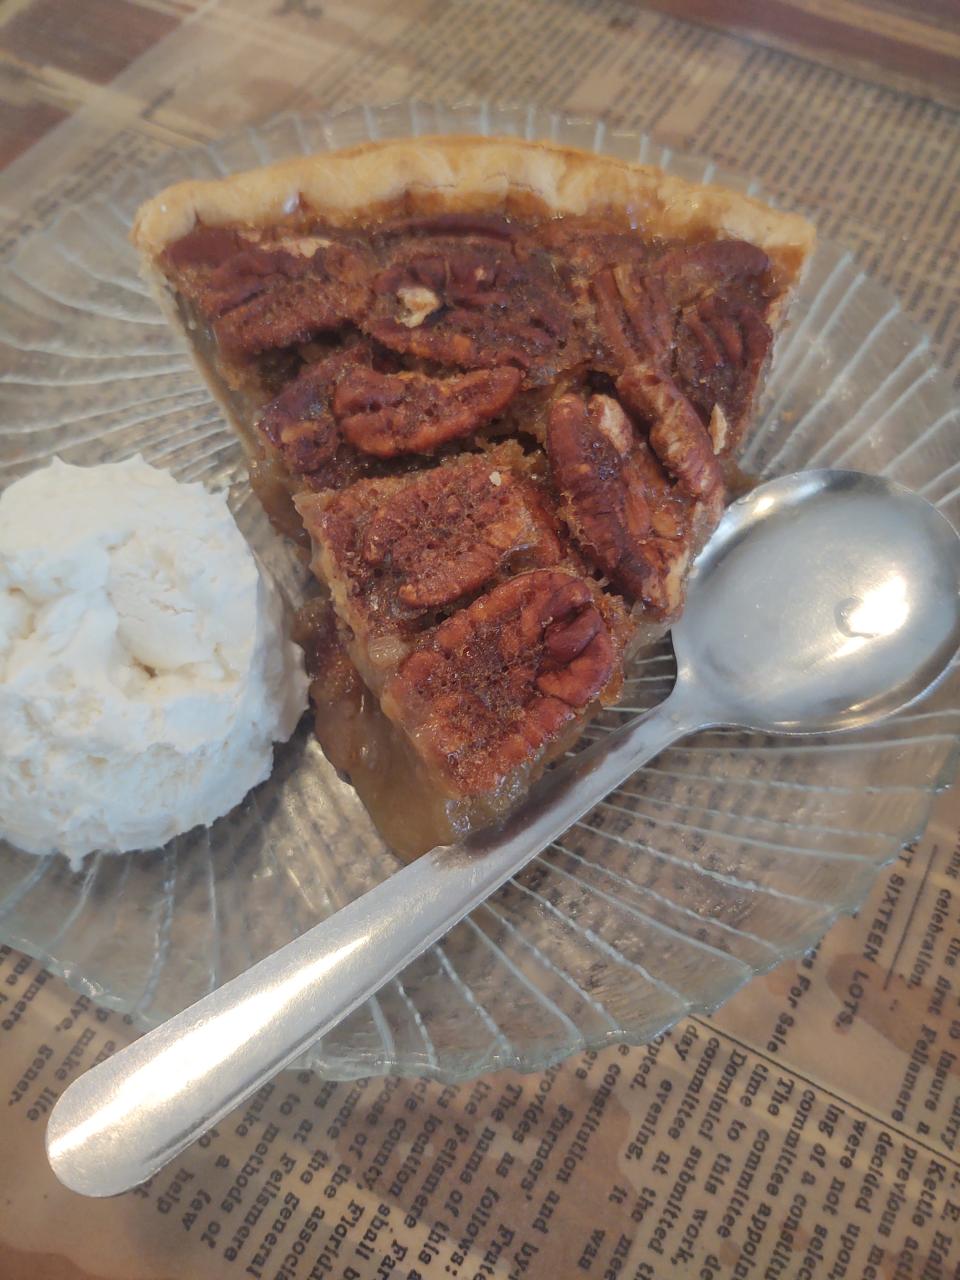 At Marsh Landing Restaurant in Fellsmere, the caramel bourbon pecan pie is a Southern favorite.